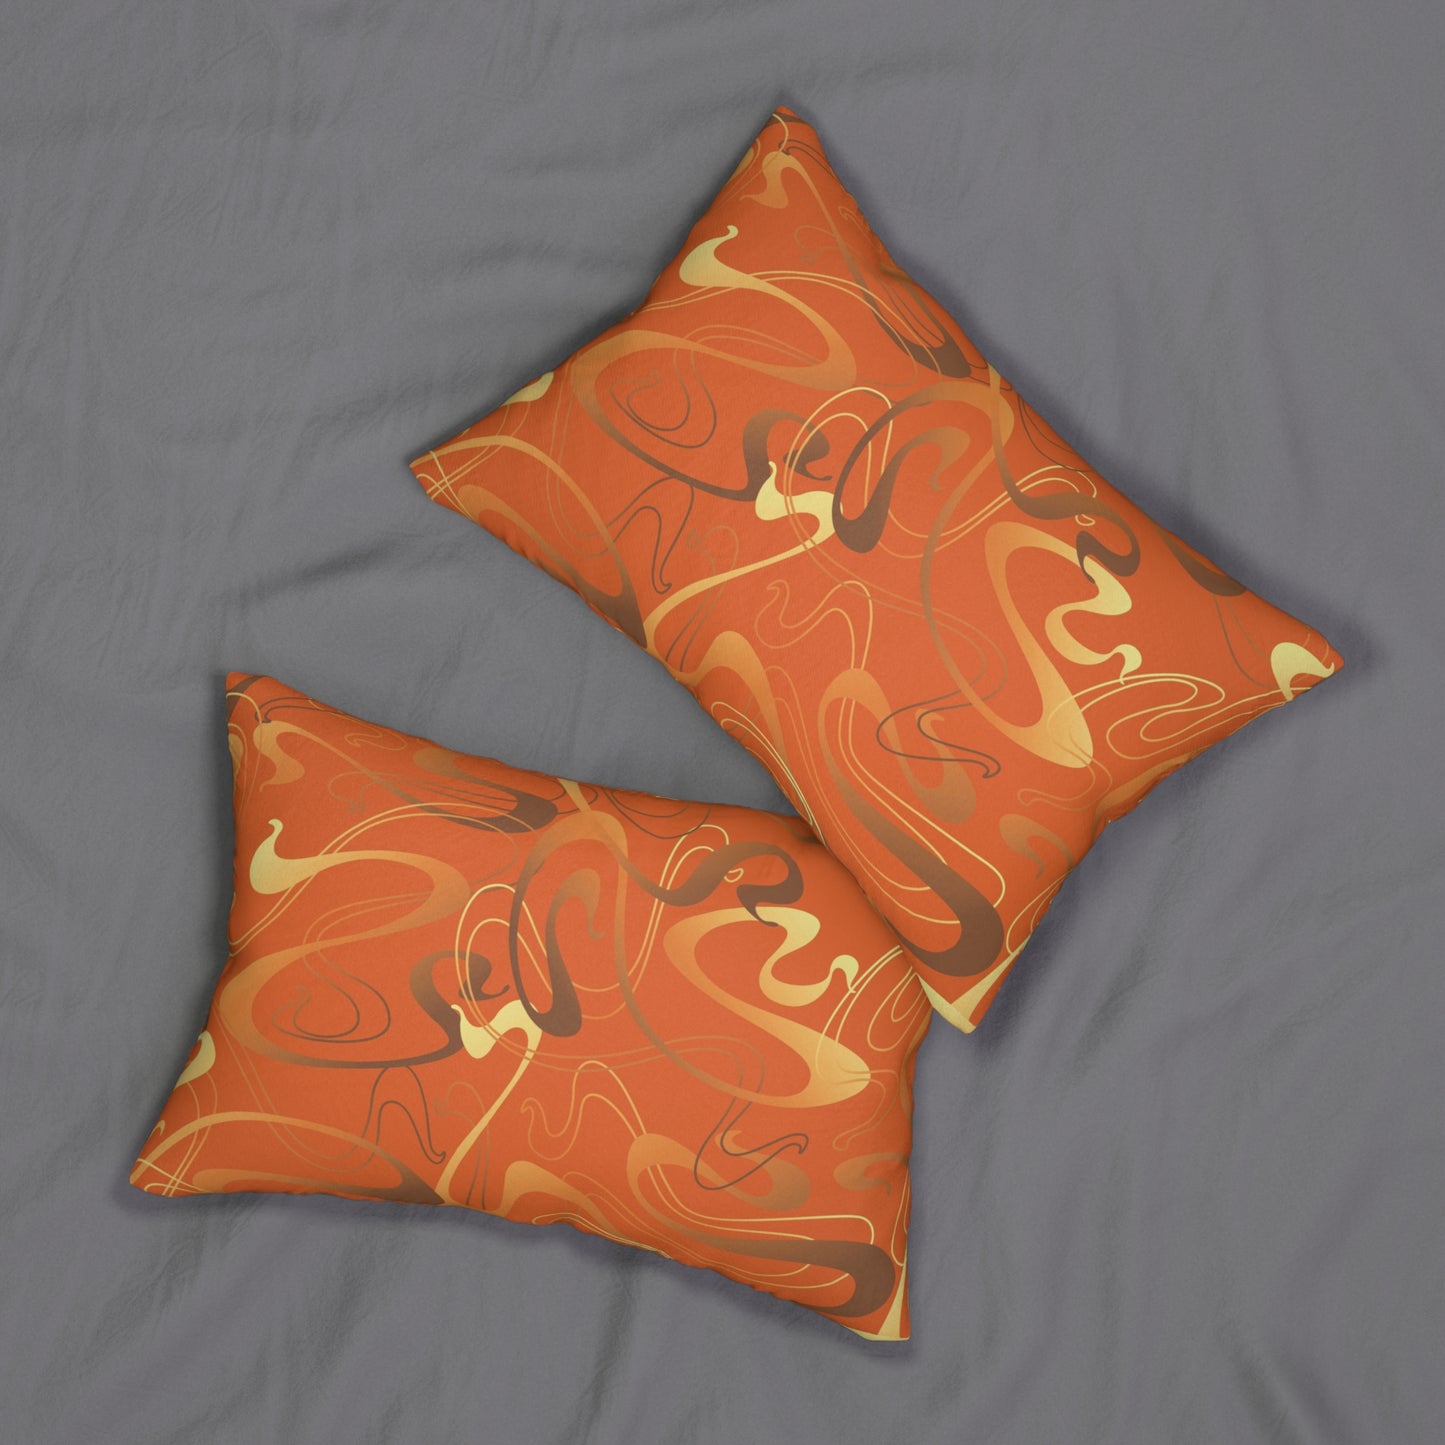 Burnt Orange Pattern Accent Pillow